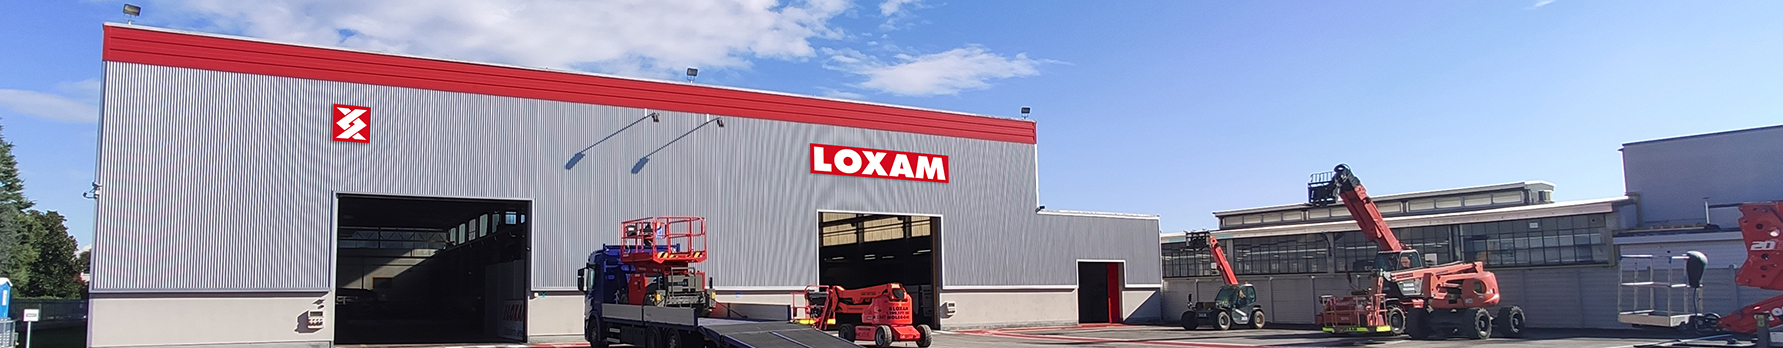 Nuova sede Loxam a Lainate (MI)